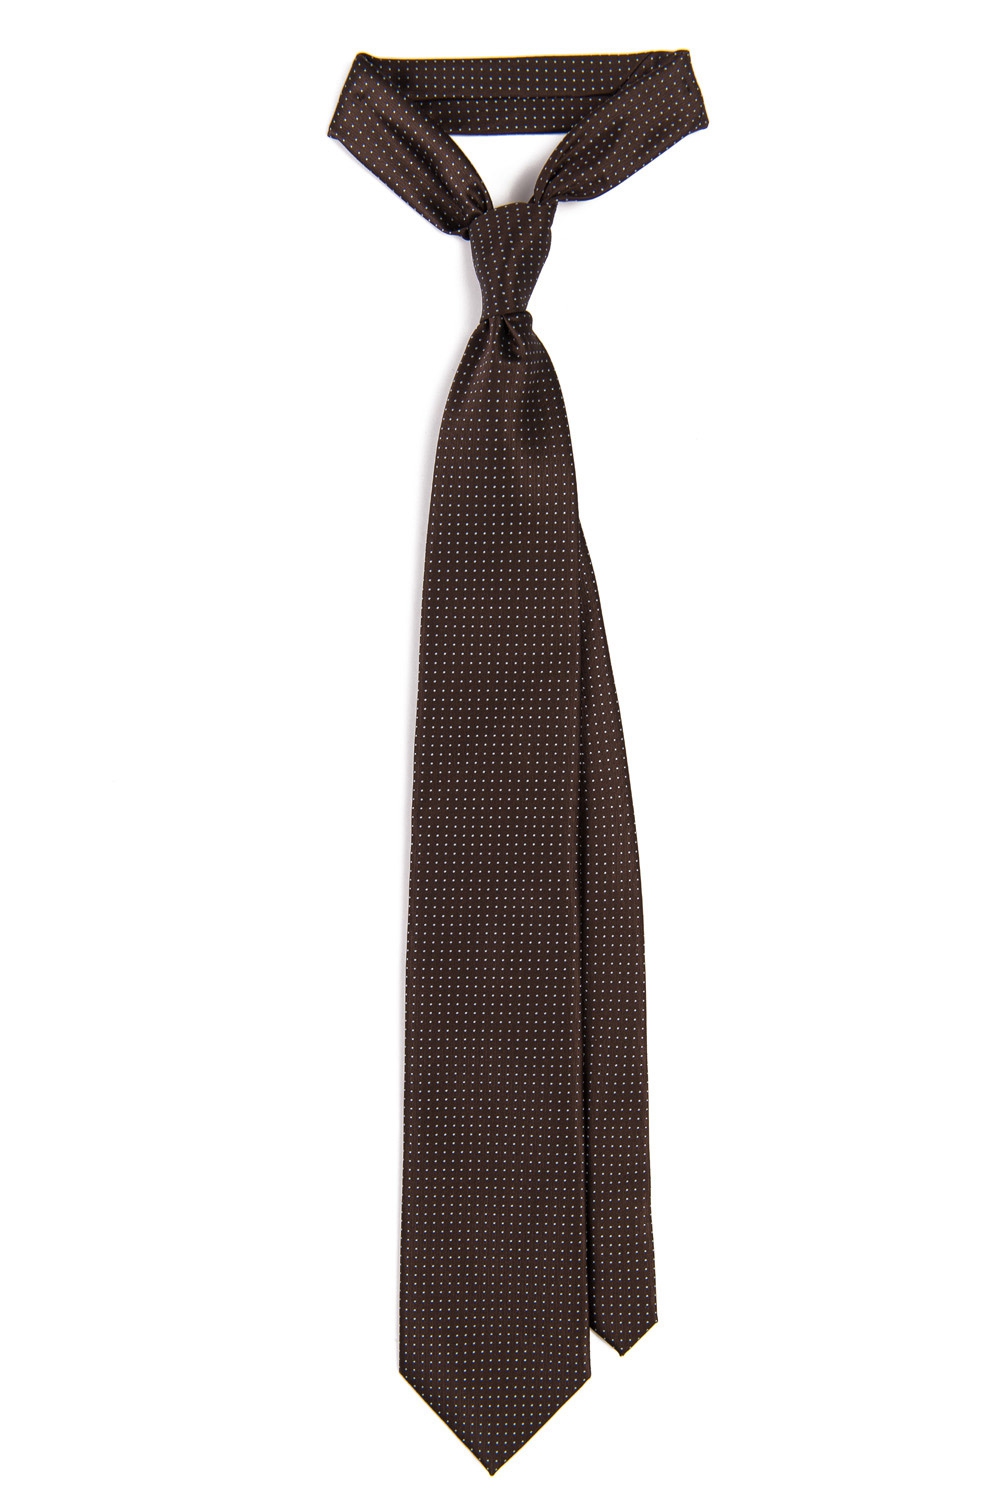 Cravata poliester maro print geometric 0